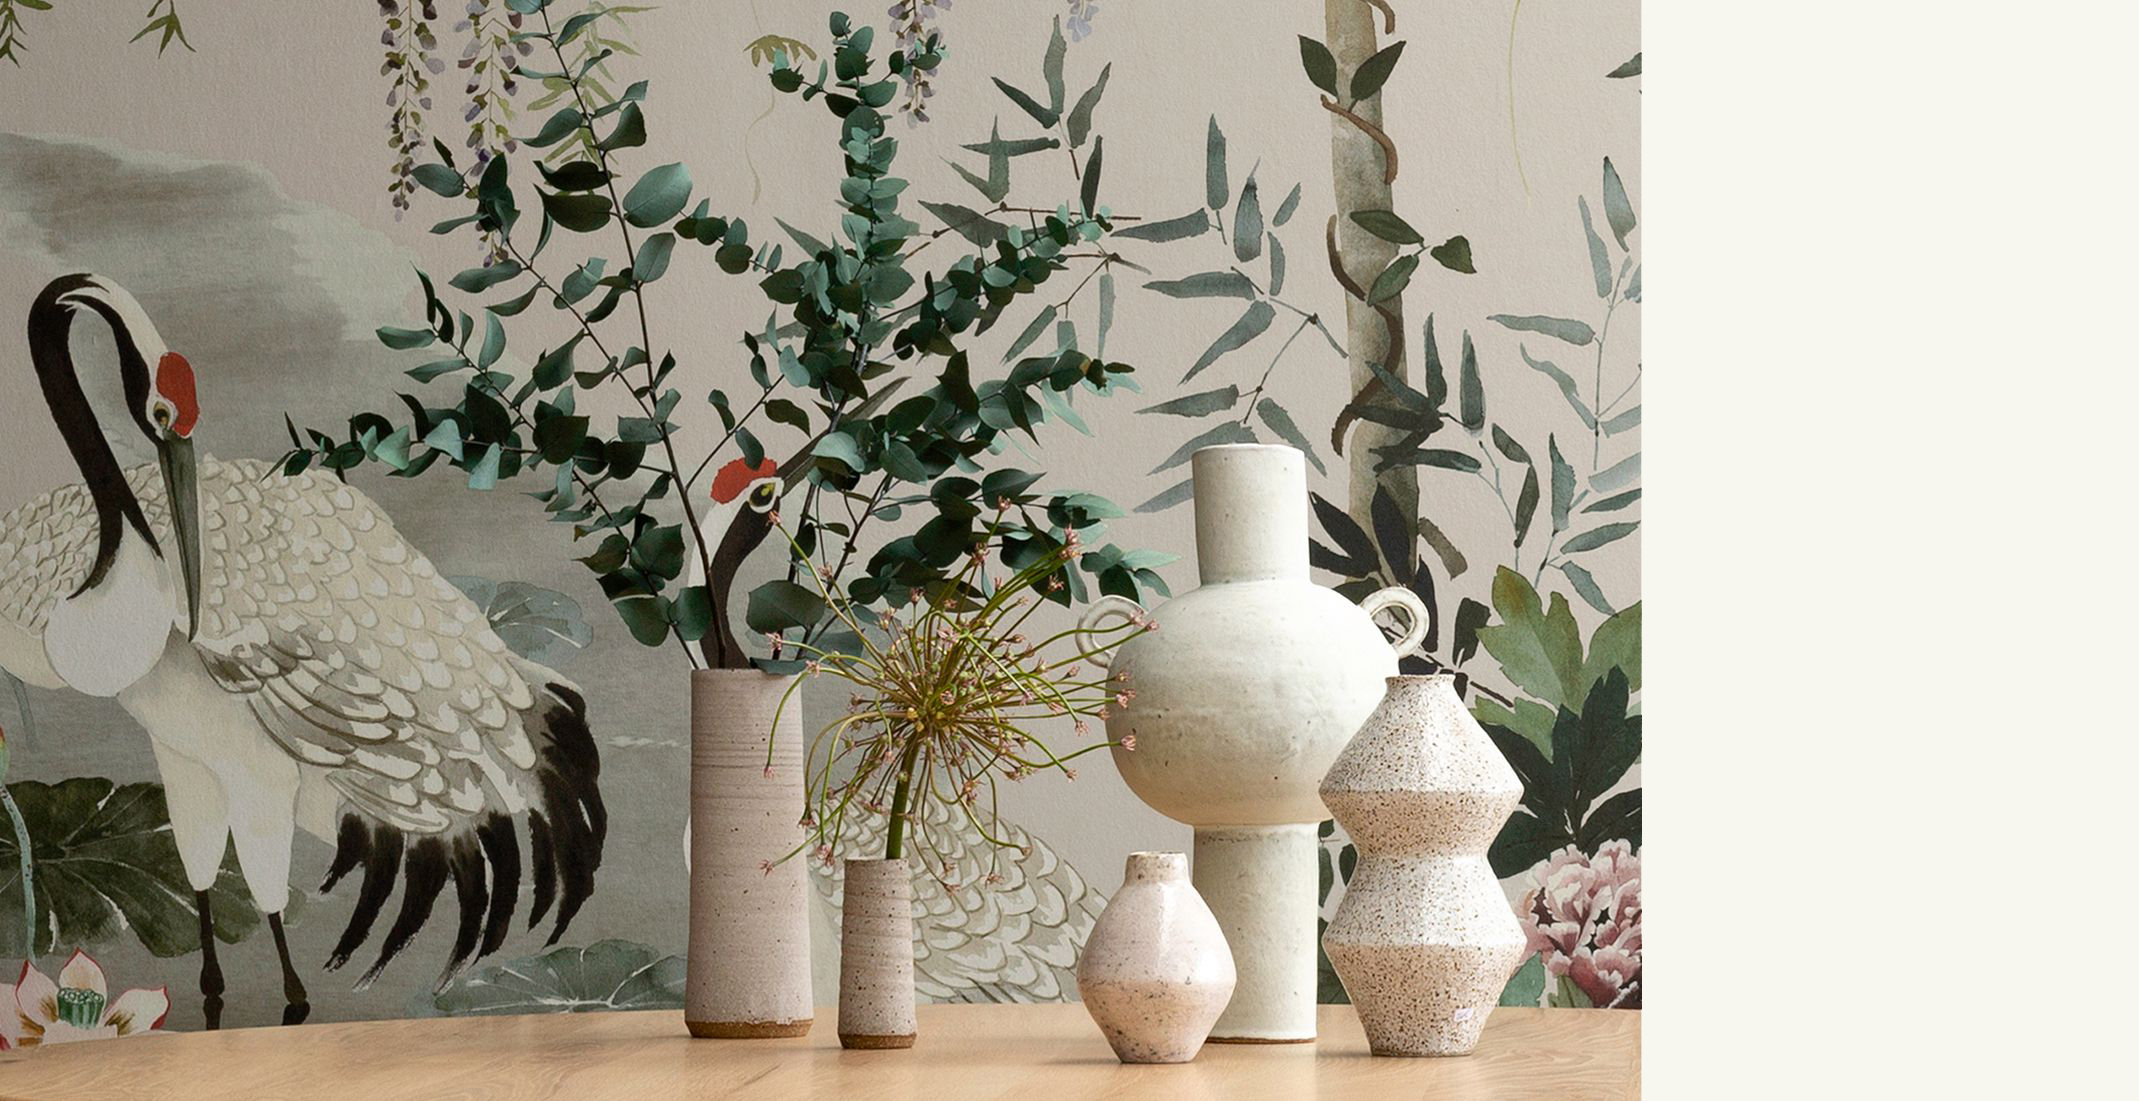 Mizu Garden + Ceramics